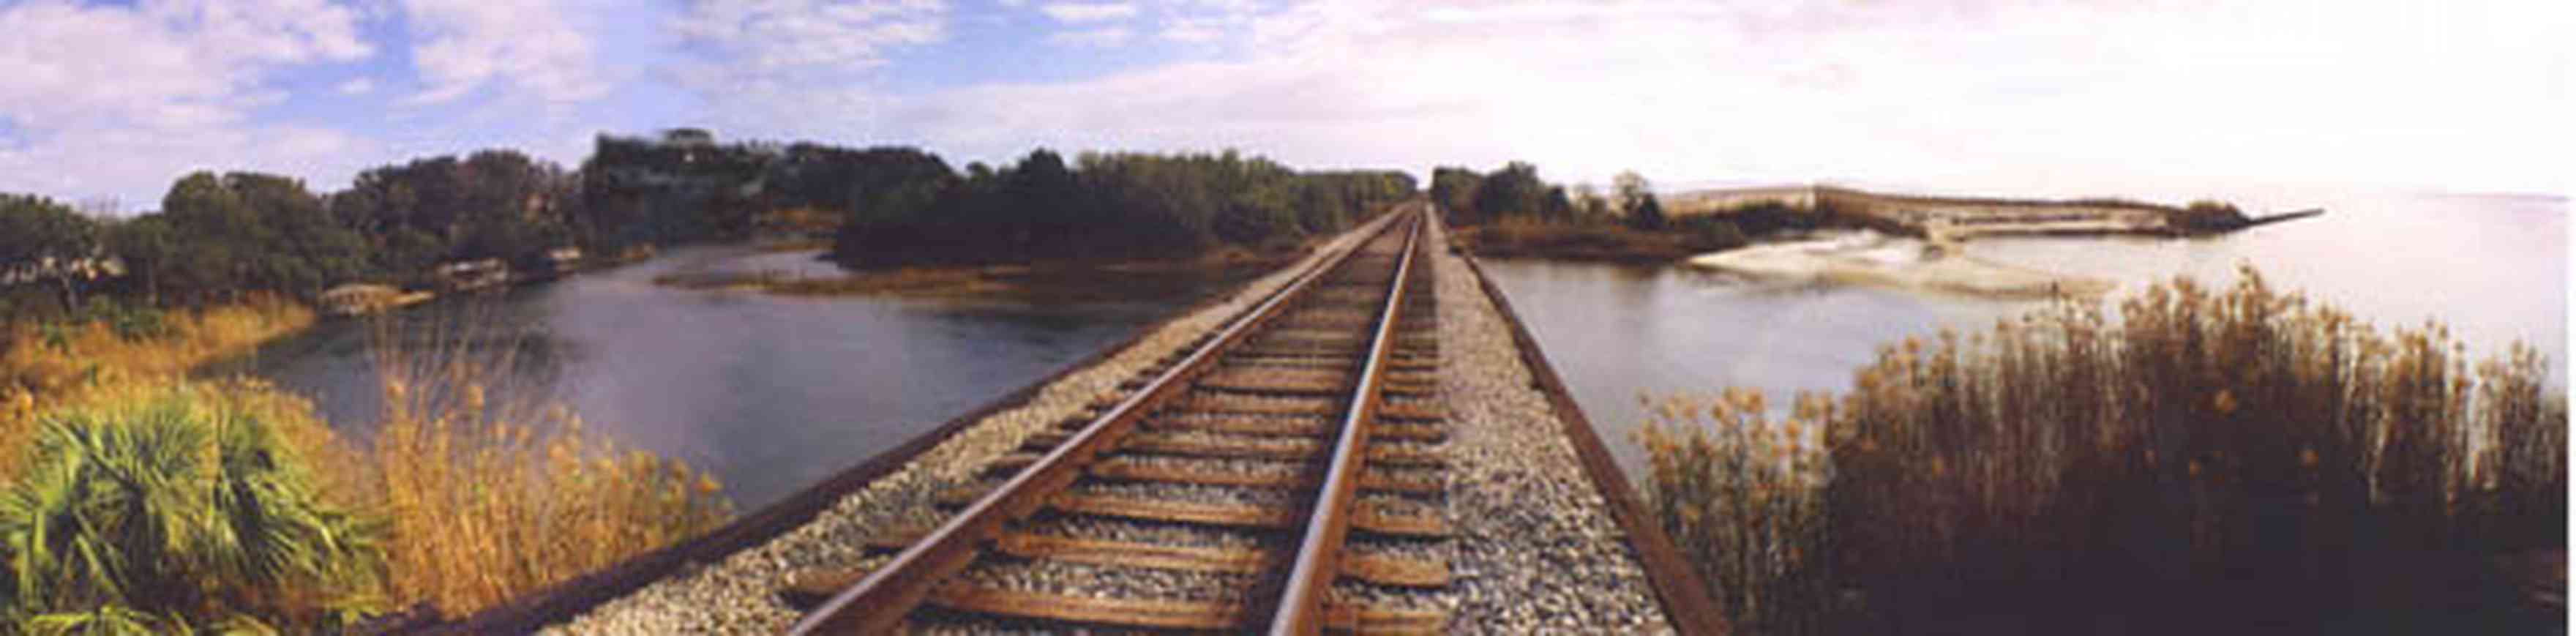  Railroad-Trestle_01.jpg: csx railroad, train tracks, bayou texar